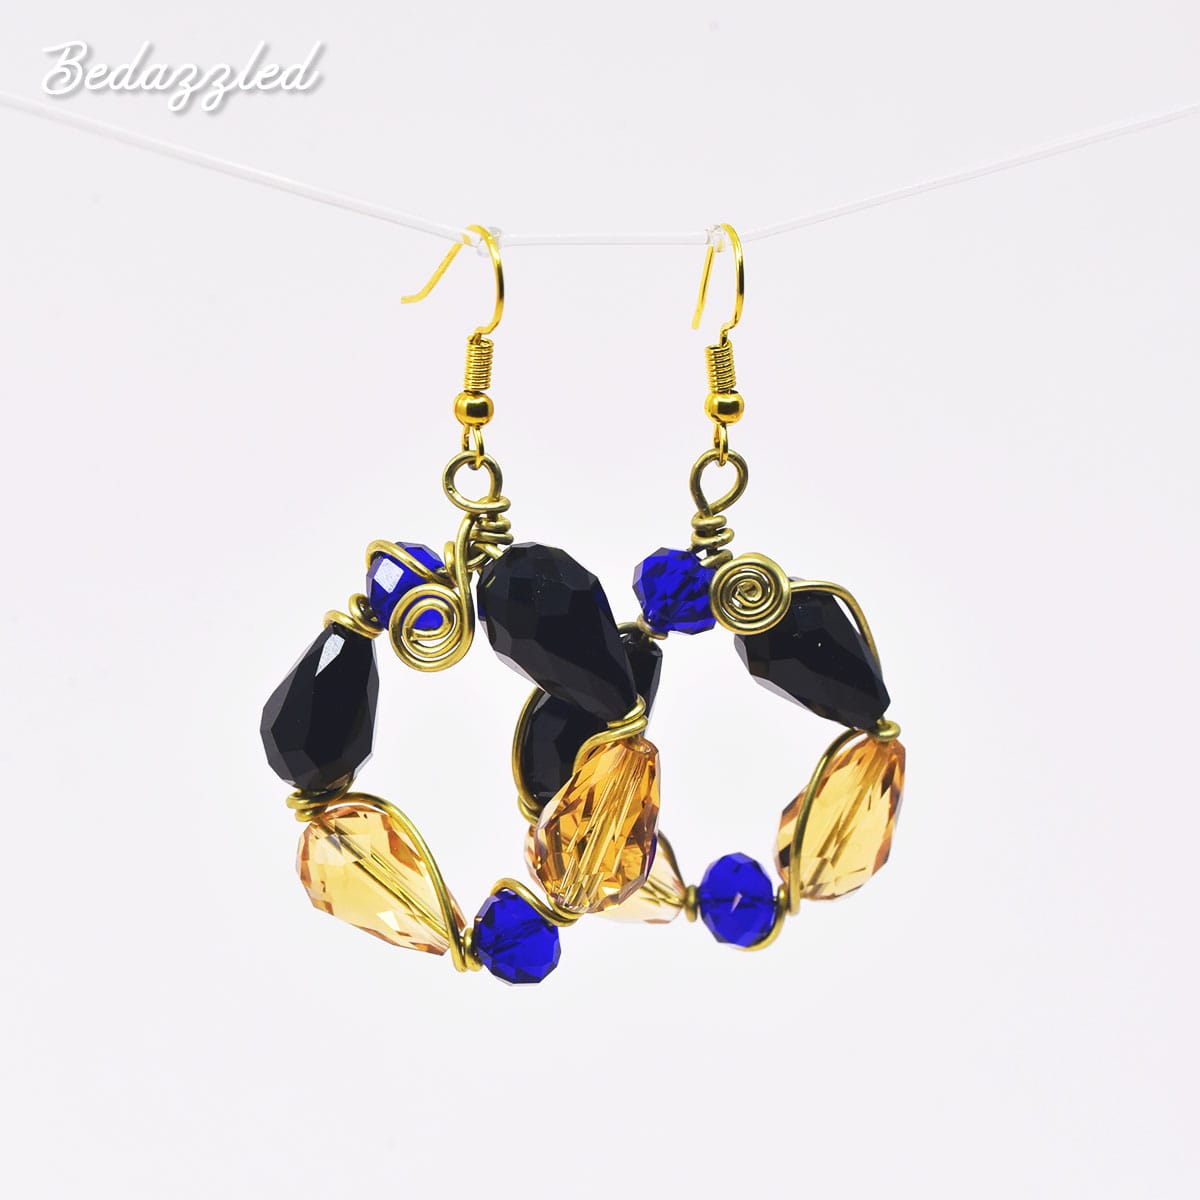 Bejeweled Style 7 - Earrings